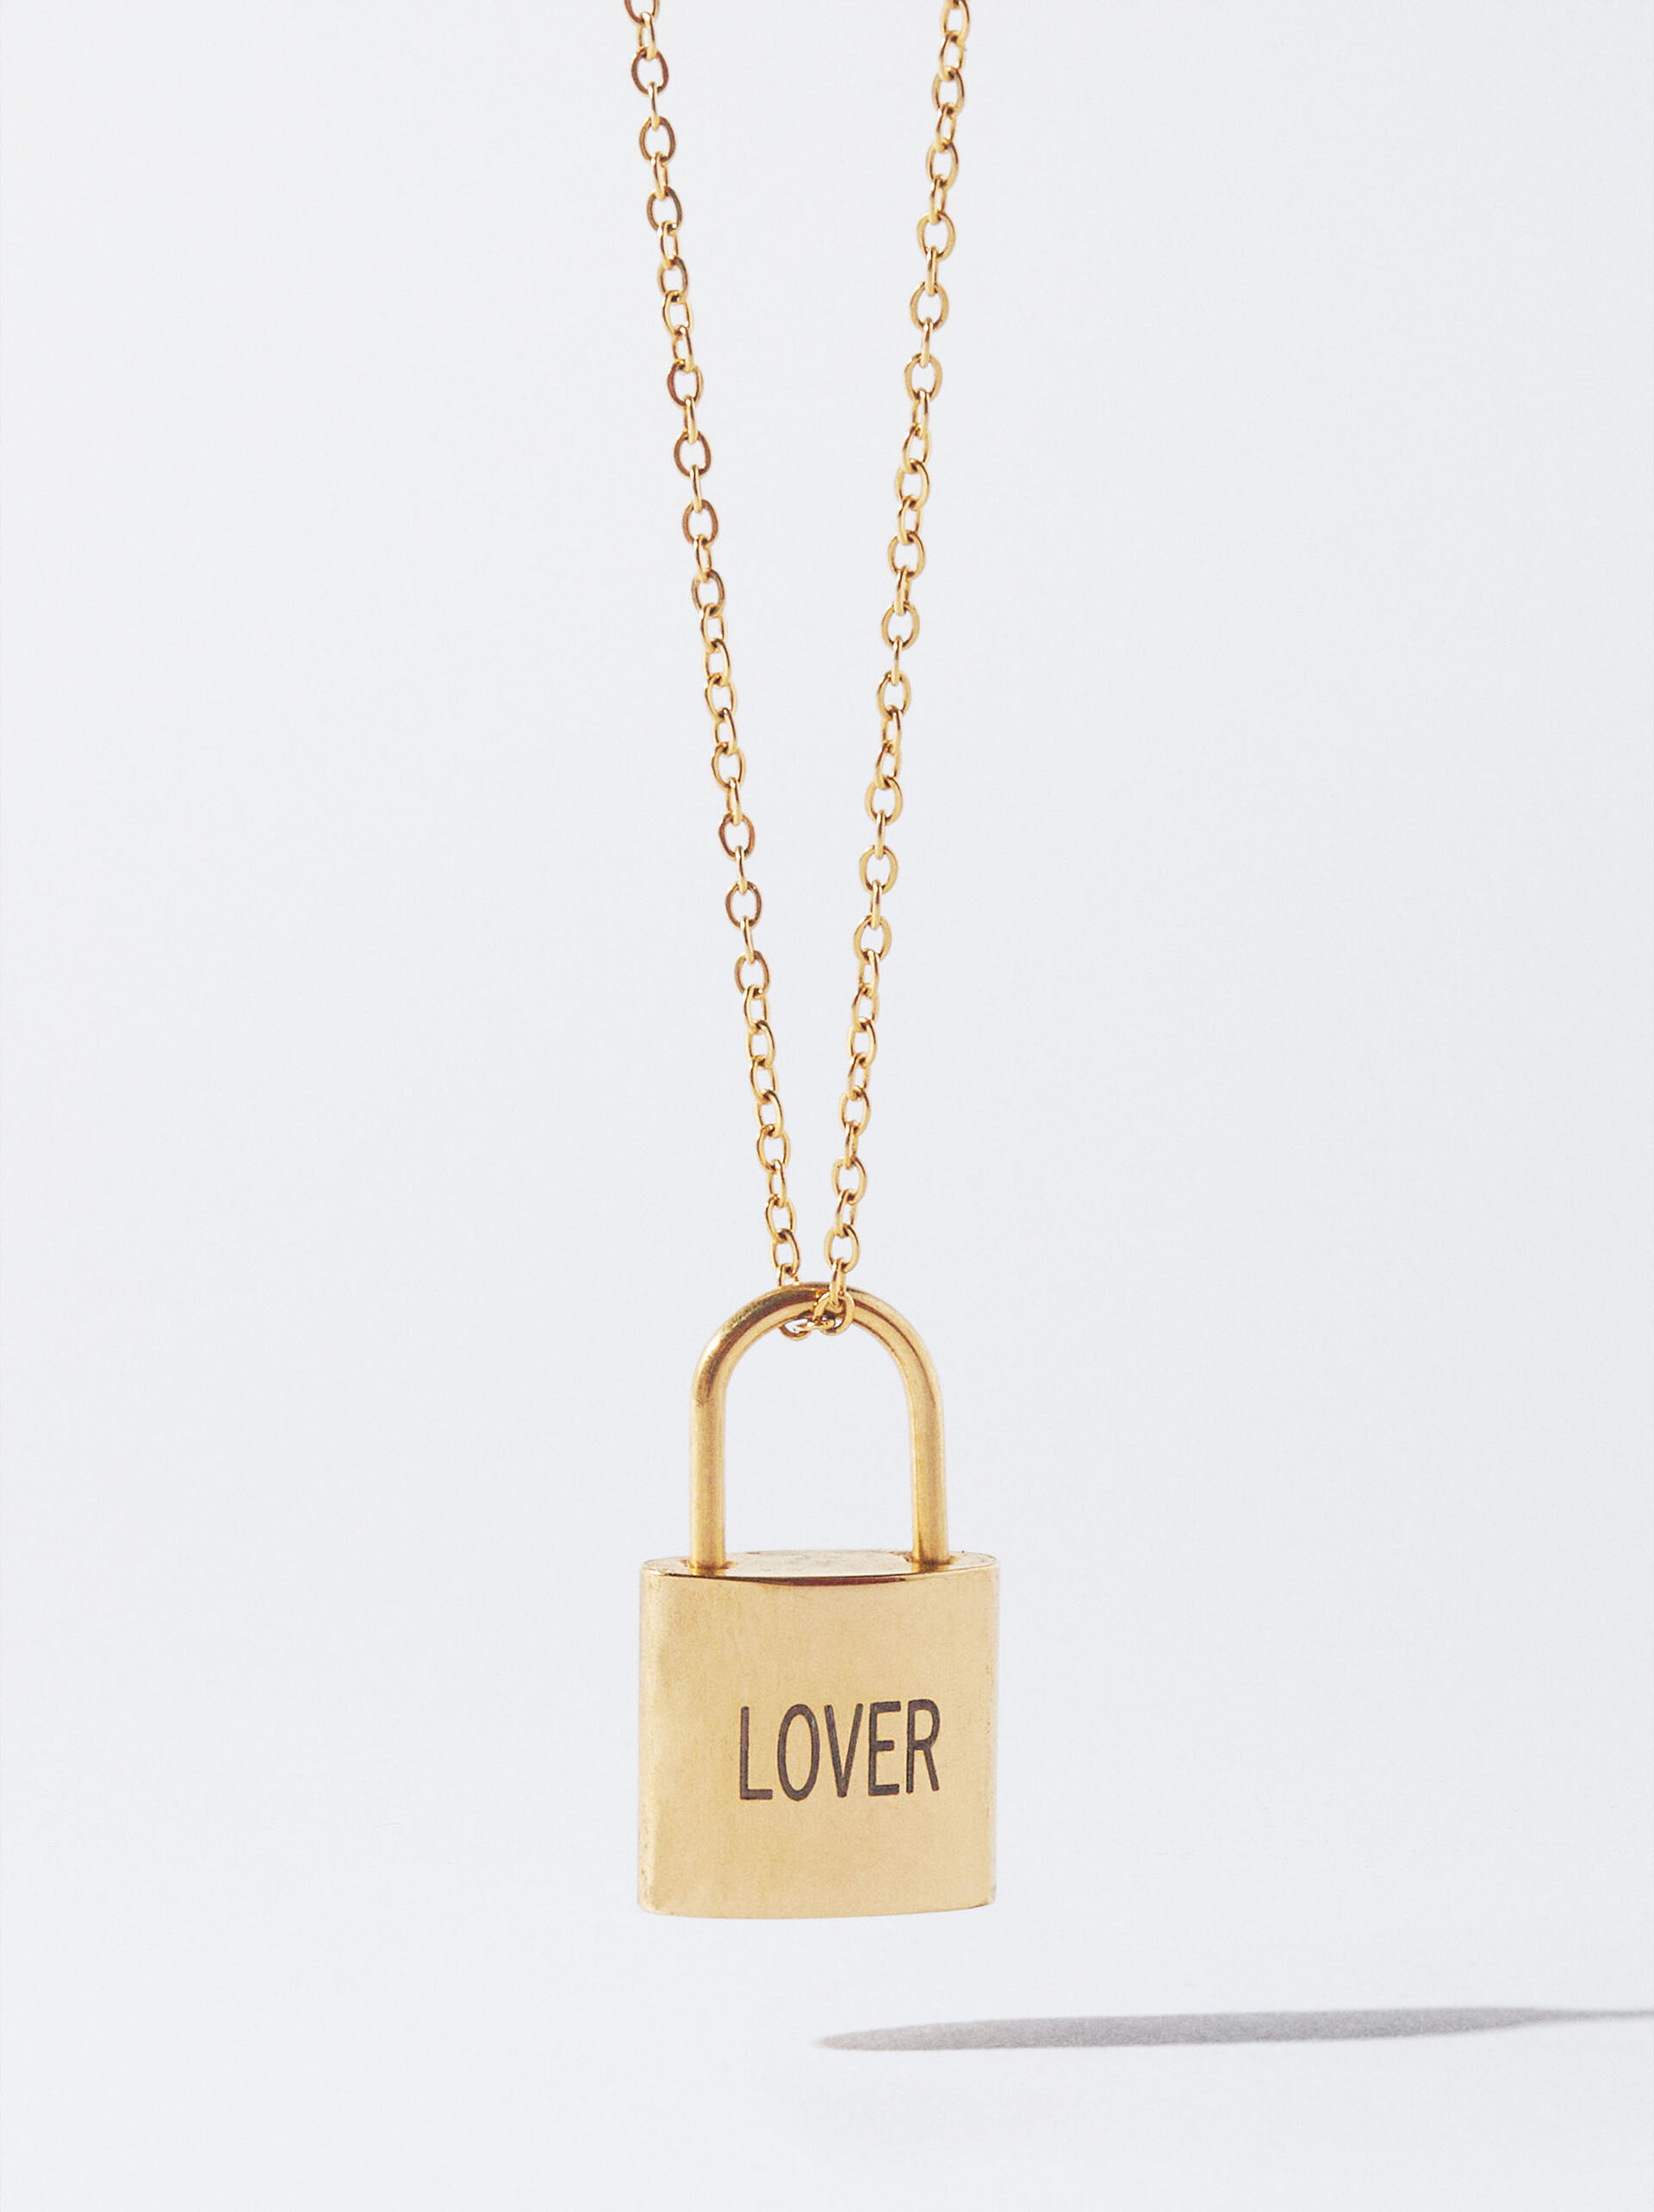 Online Exclusive - Personalized Golden Steel Lock Necklace image number 0.0